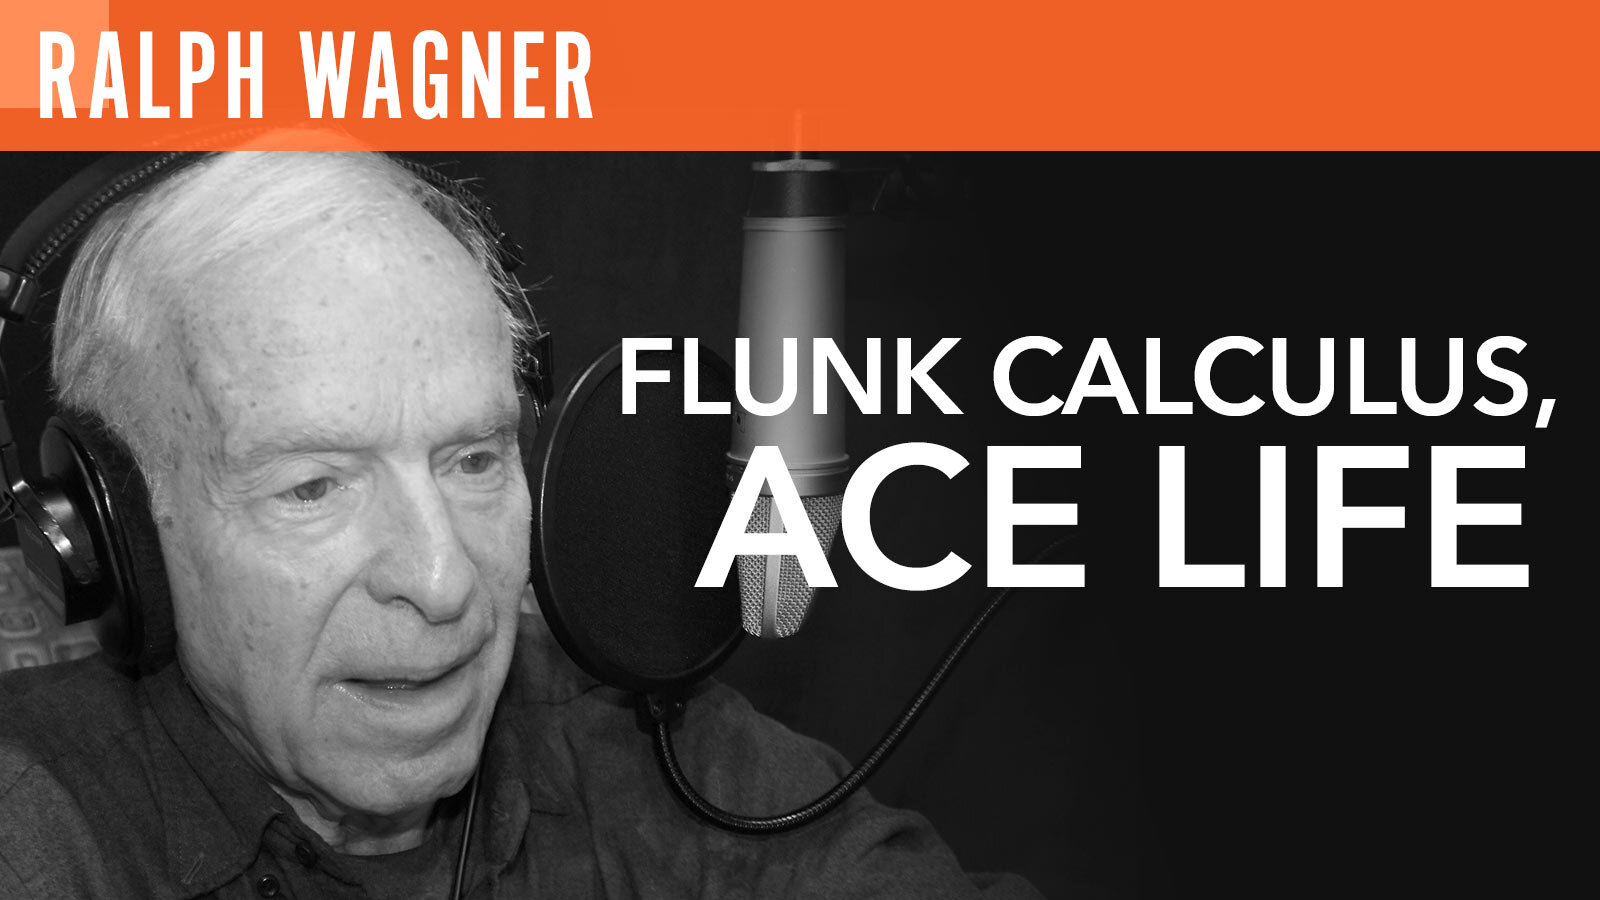 Ralph Wagner, "Flunk Calculus, Ace Life"